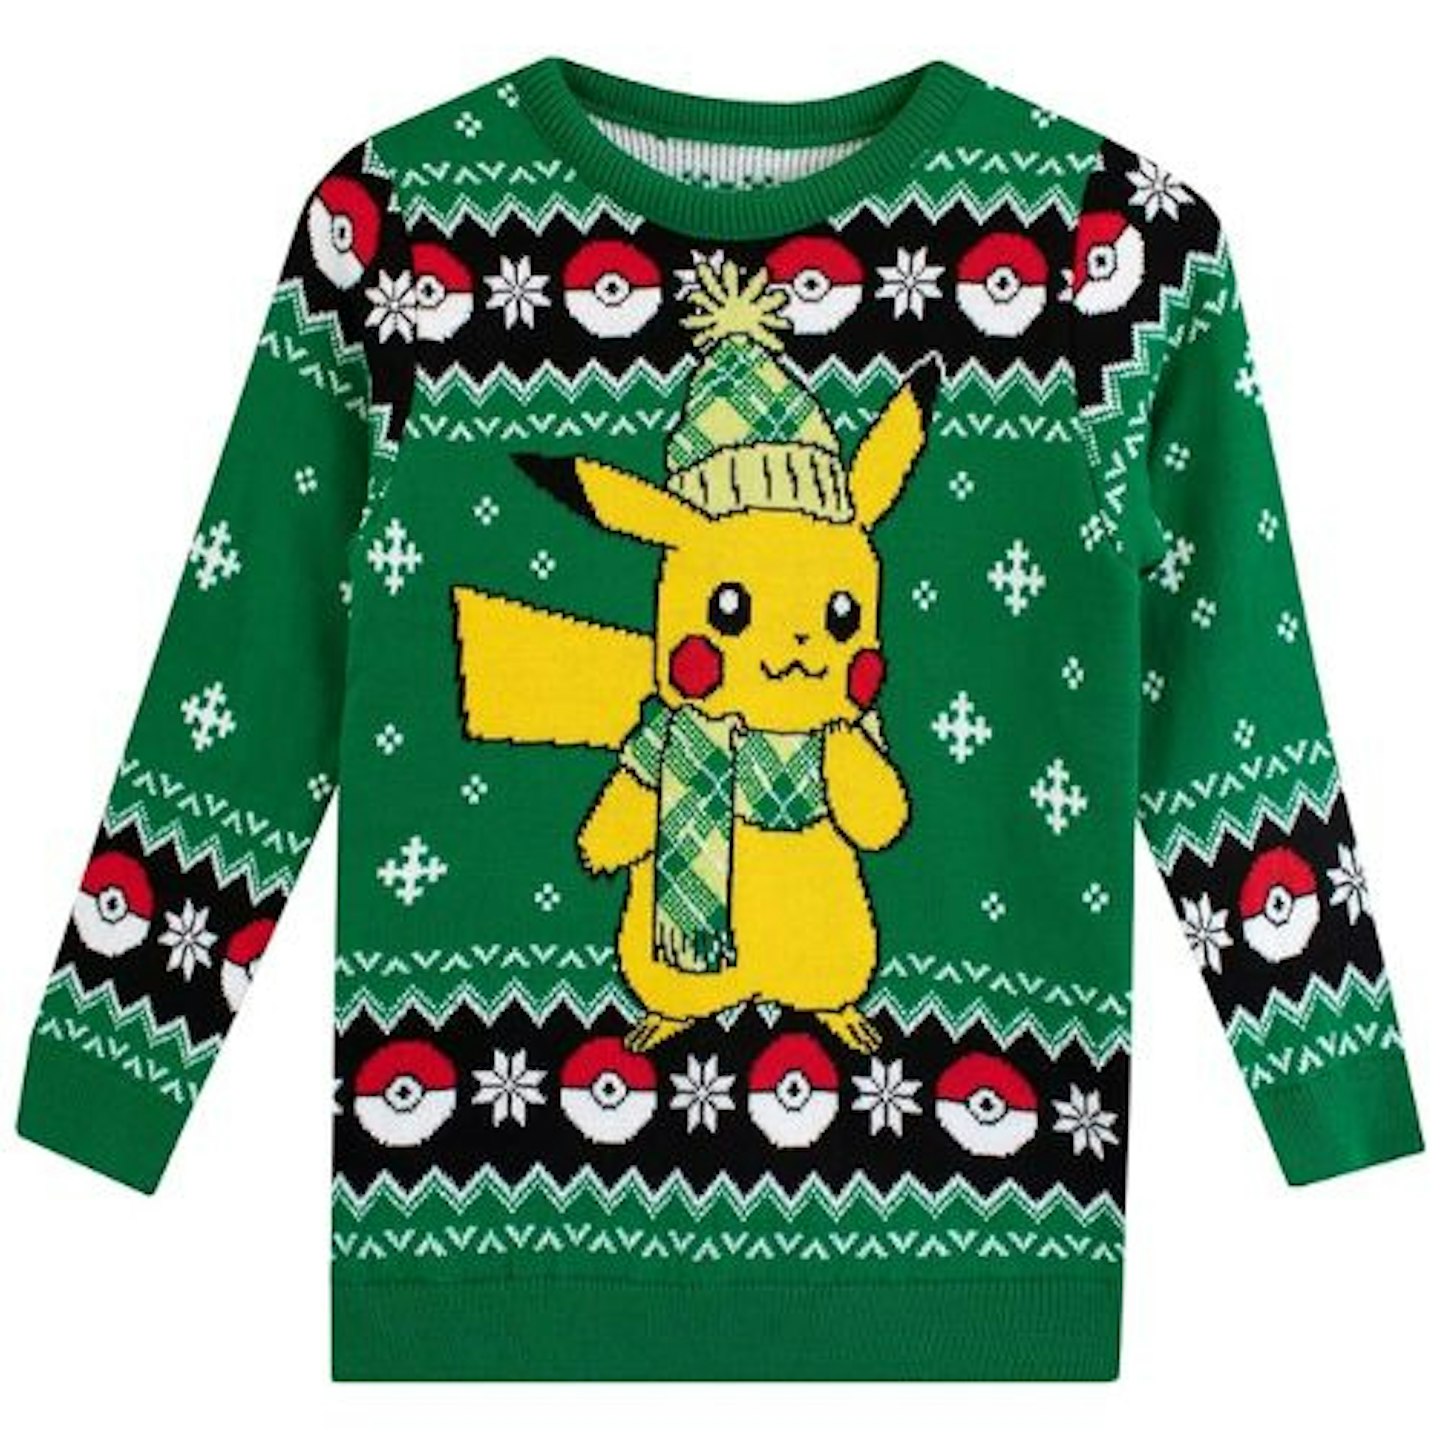 Best Pokemon Christmas gifts Pokemon Boys Pikachu Christmas Jumper